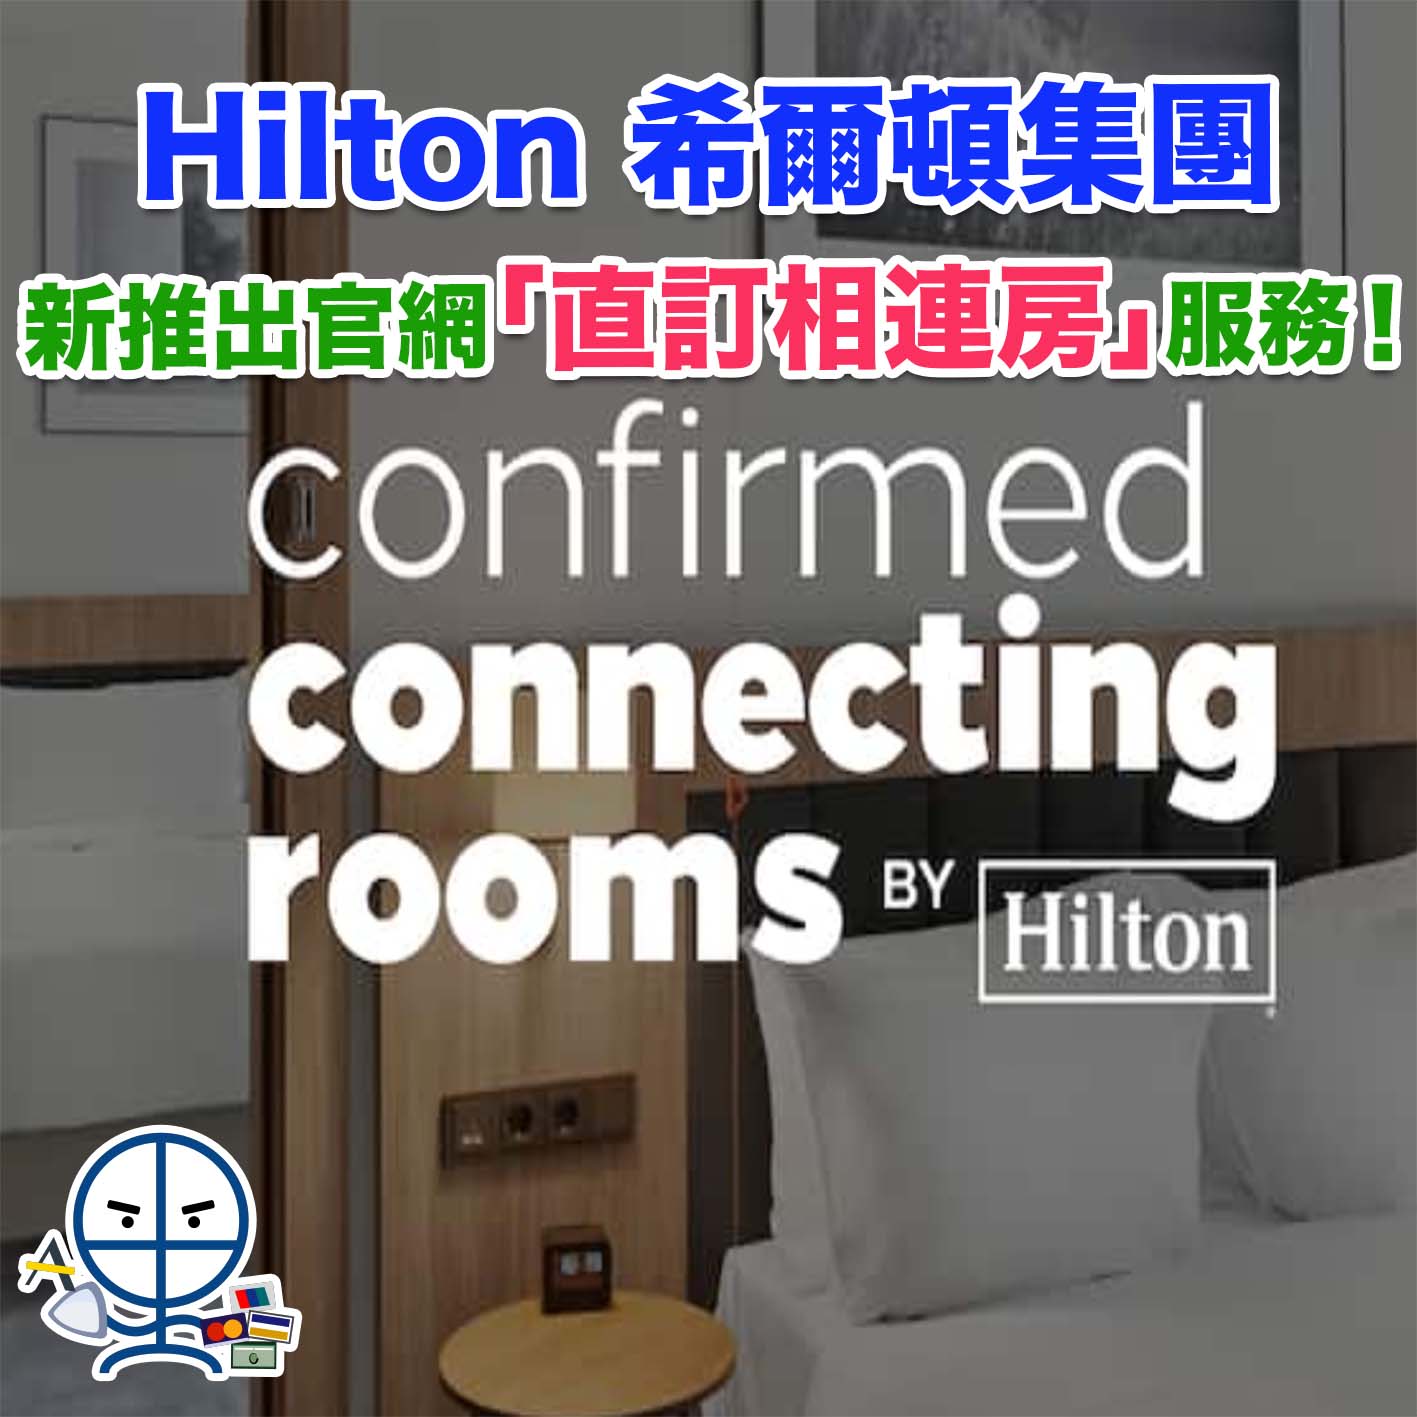 【Hilton 直訂相連房】 希爾頓集團新推出官網「直訂相連房」服務 Confirmed Connecting Rooms by Hilton！享受一站式預訂體驗！